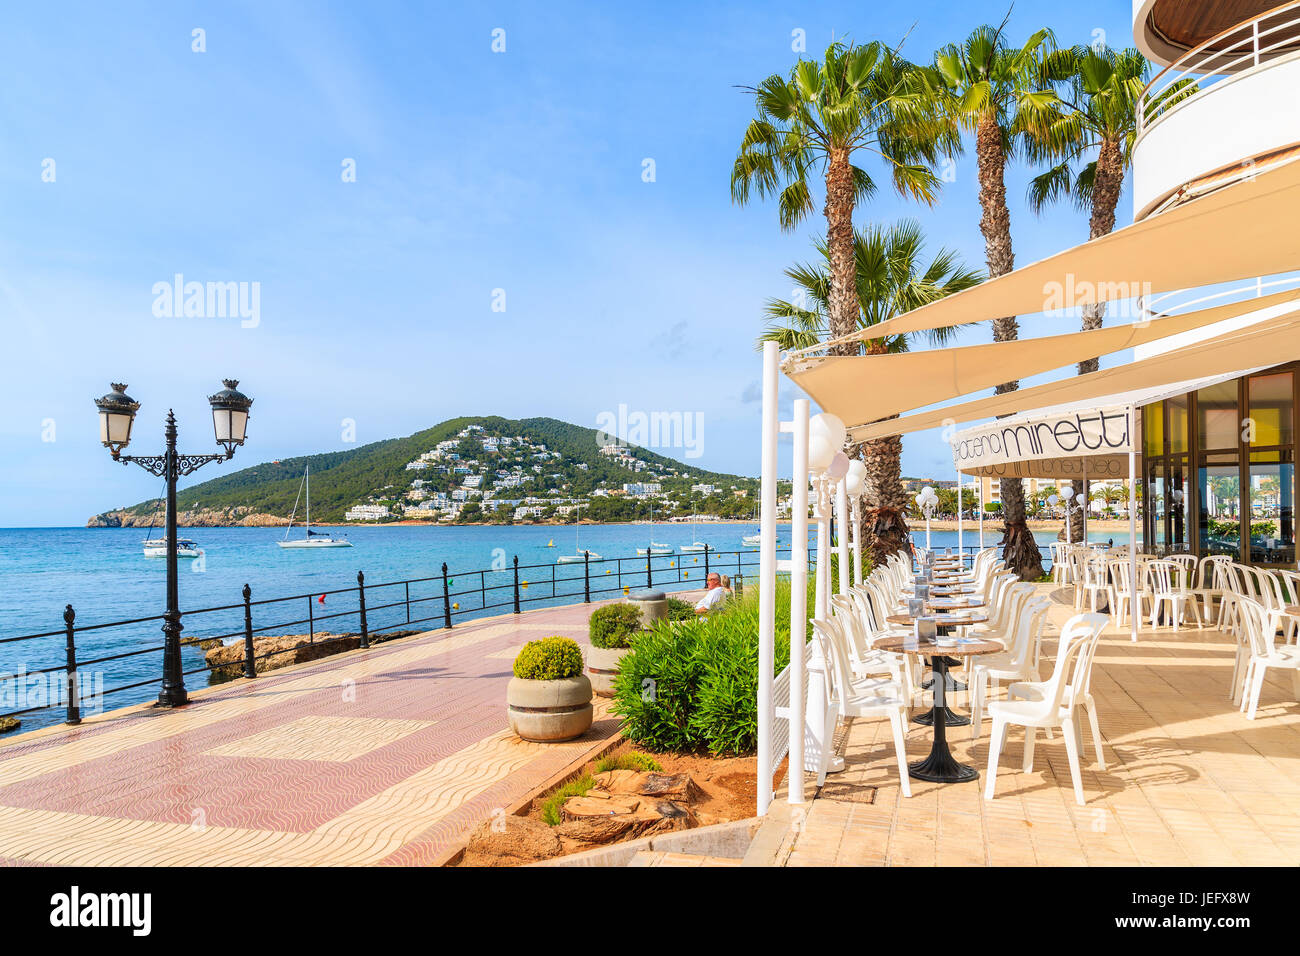 IBIZA ISLAND, SPAIN - MAY 21, 2017: Restaurant on coastal promenade along sea in Santa Eularia town, Ibiza island, Spain. Stock Photo